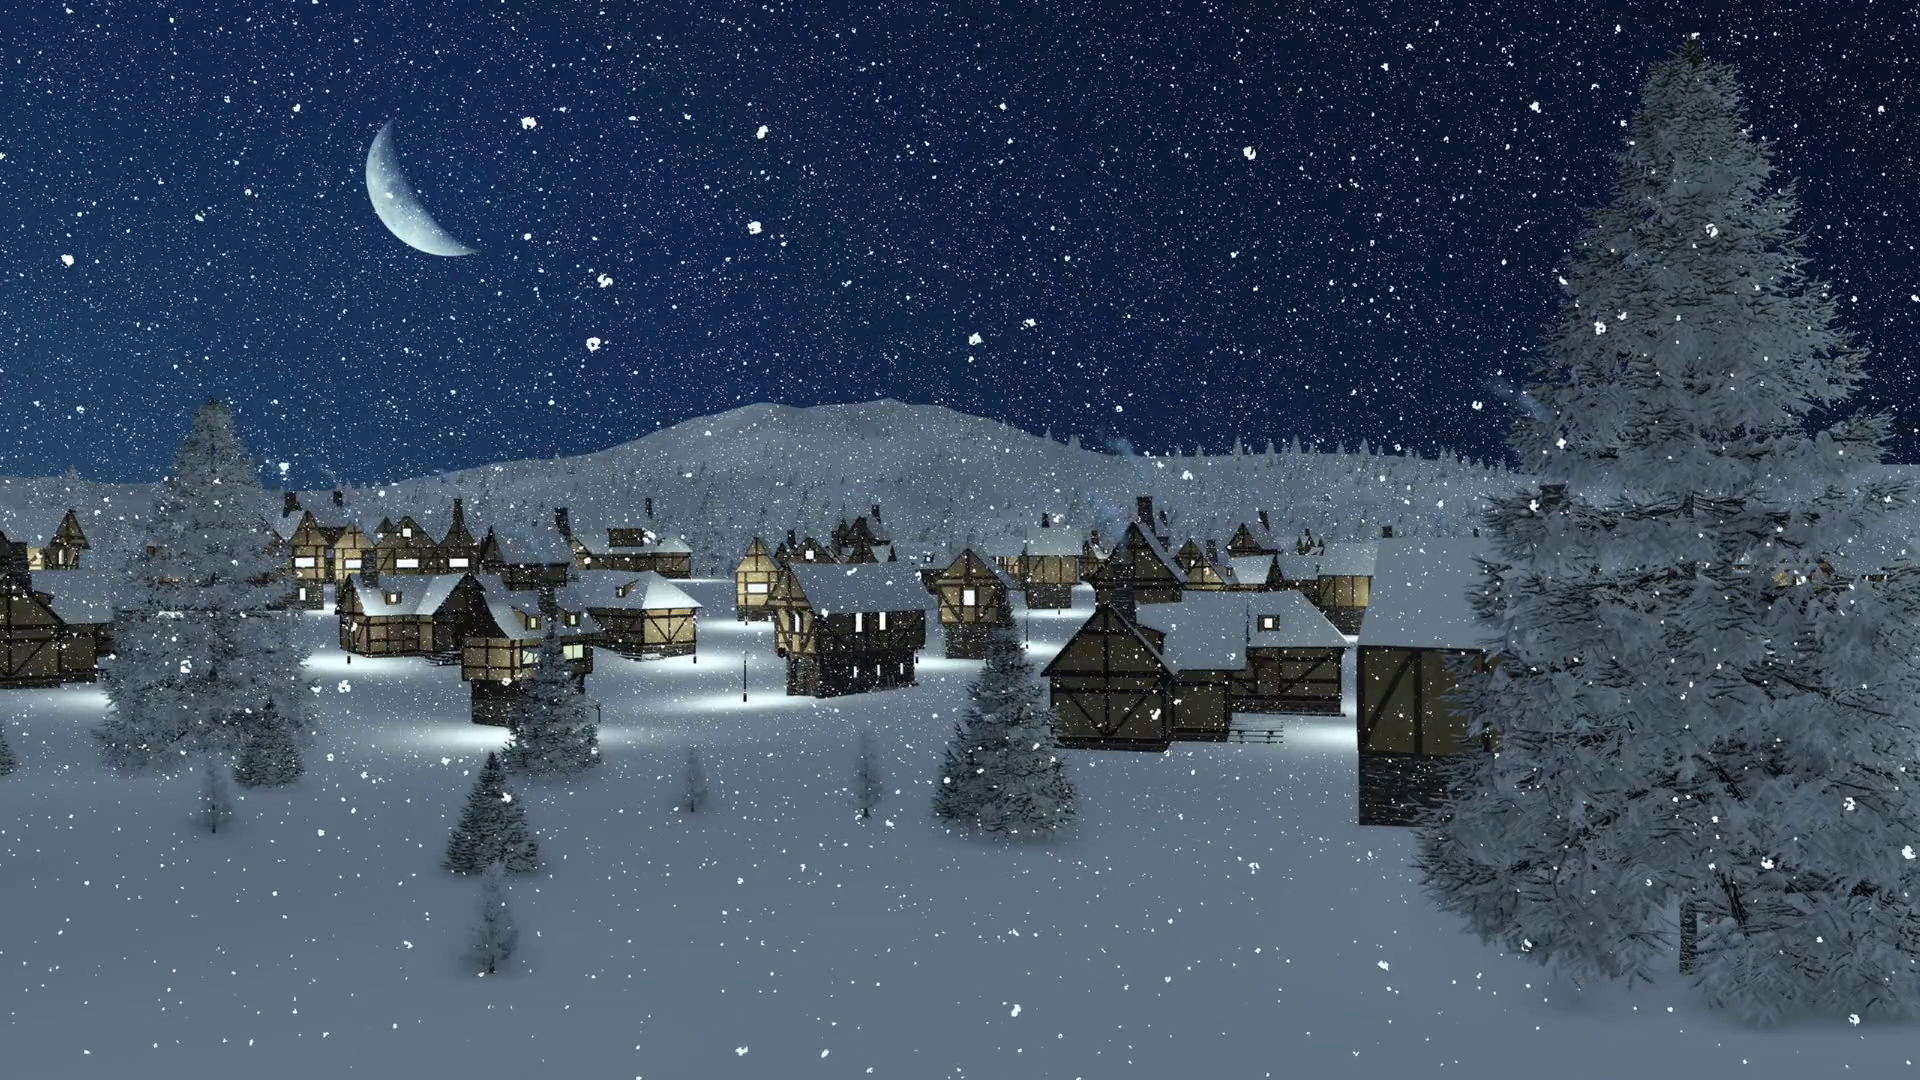 Dreamlike winter scenery. Snowbound traditional european township ...